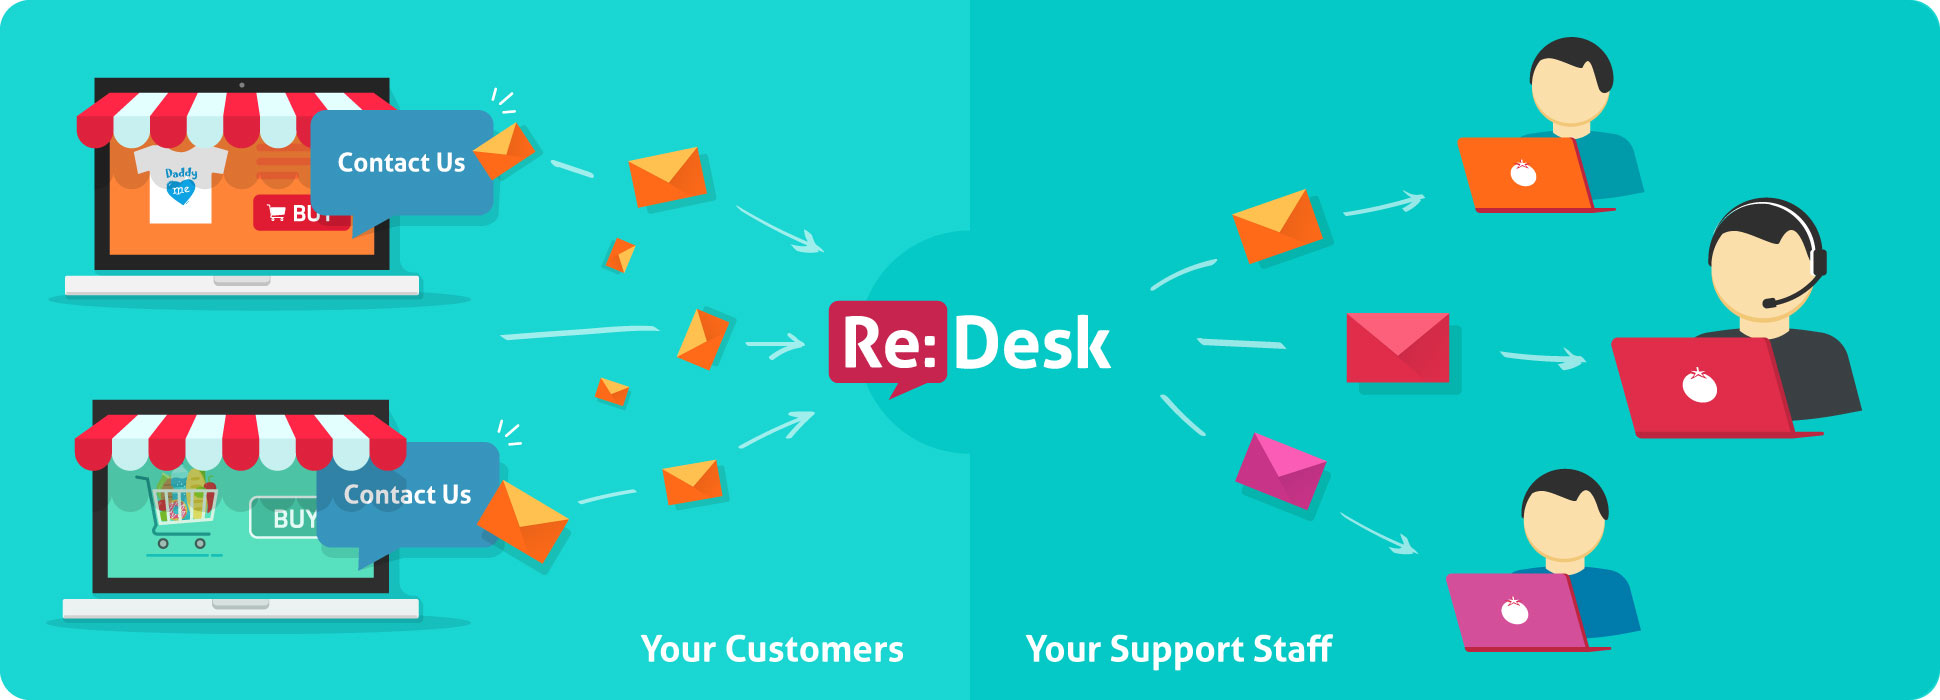 support help desk software features